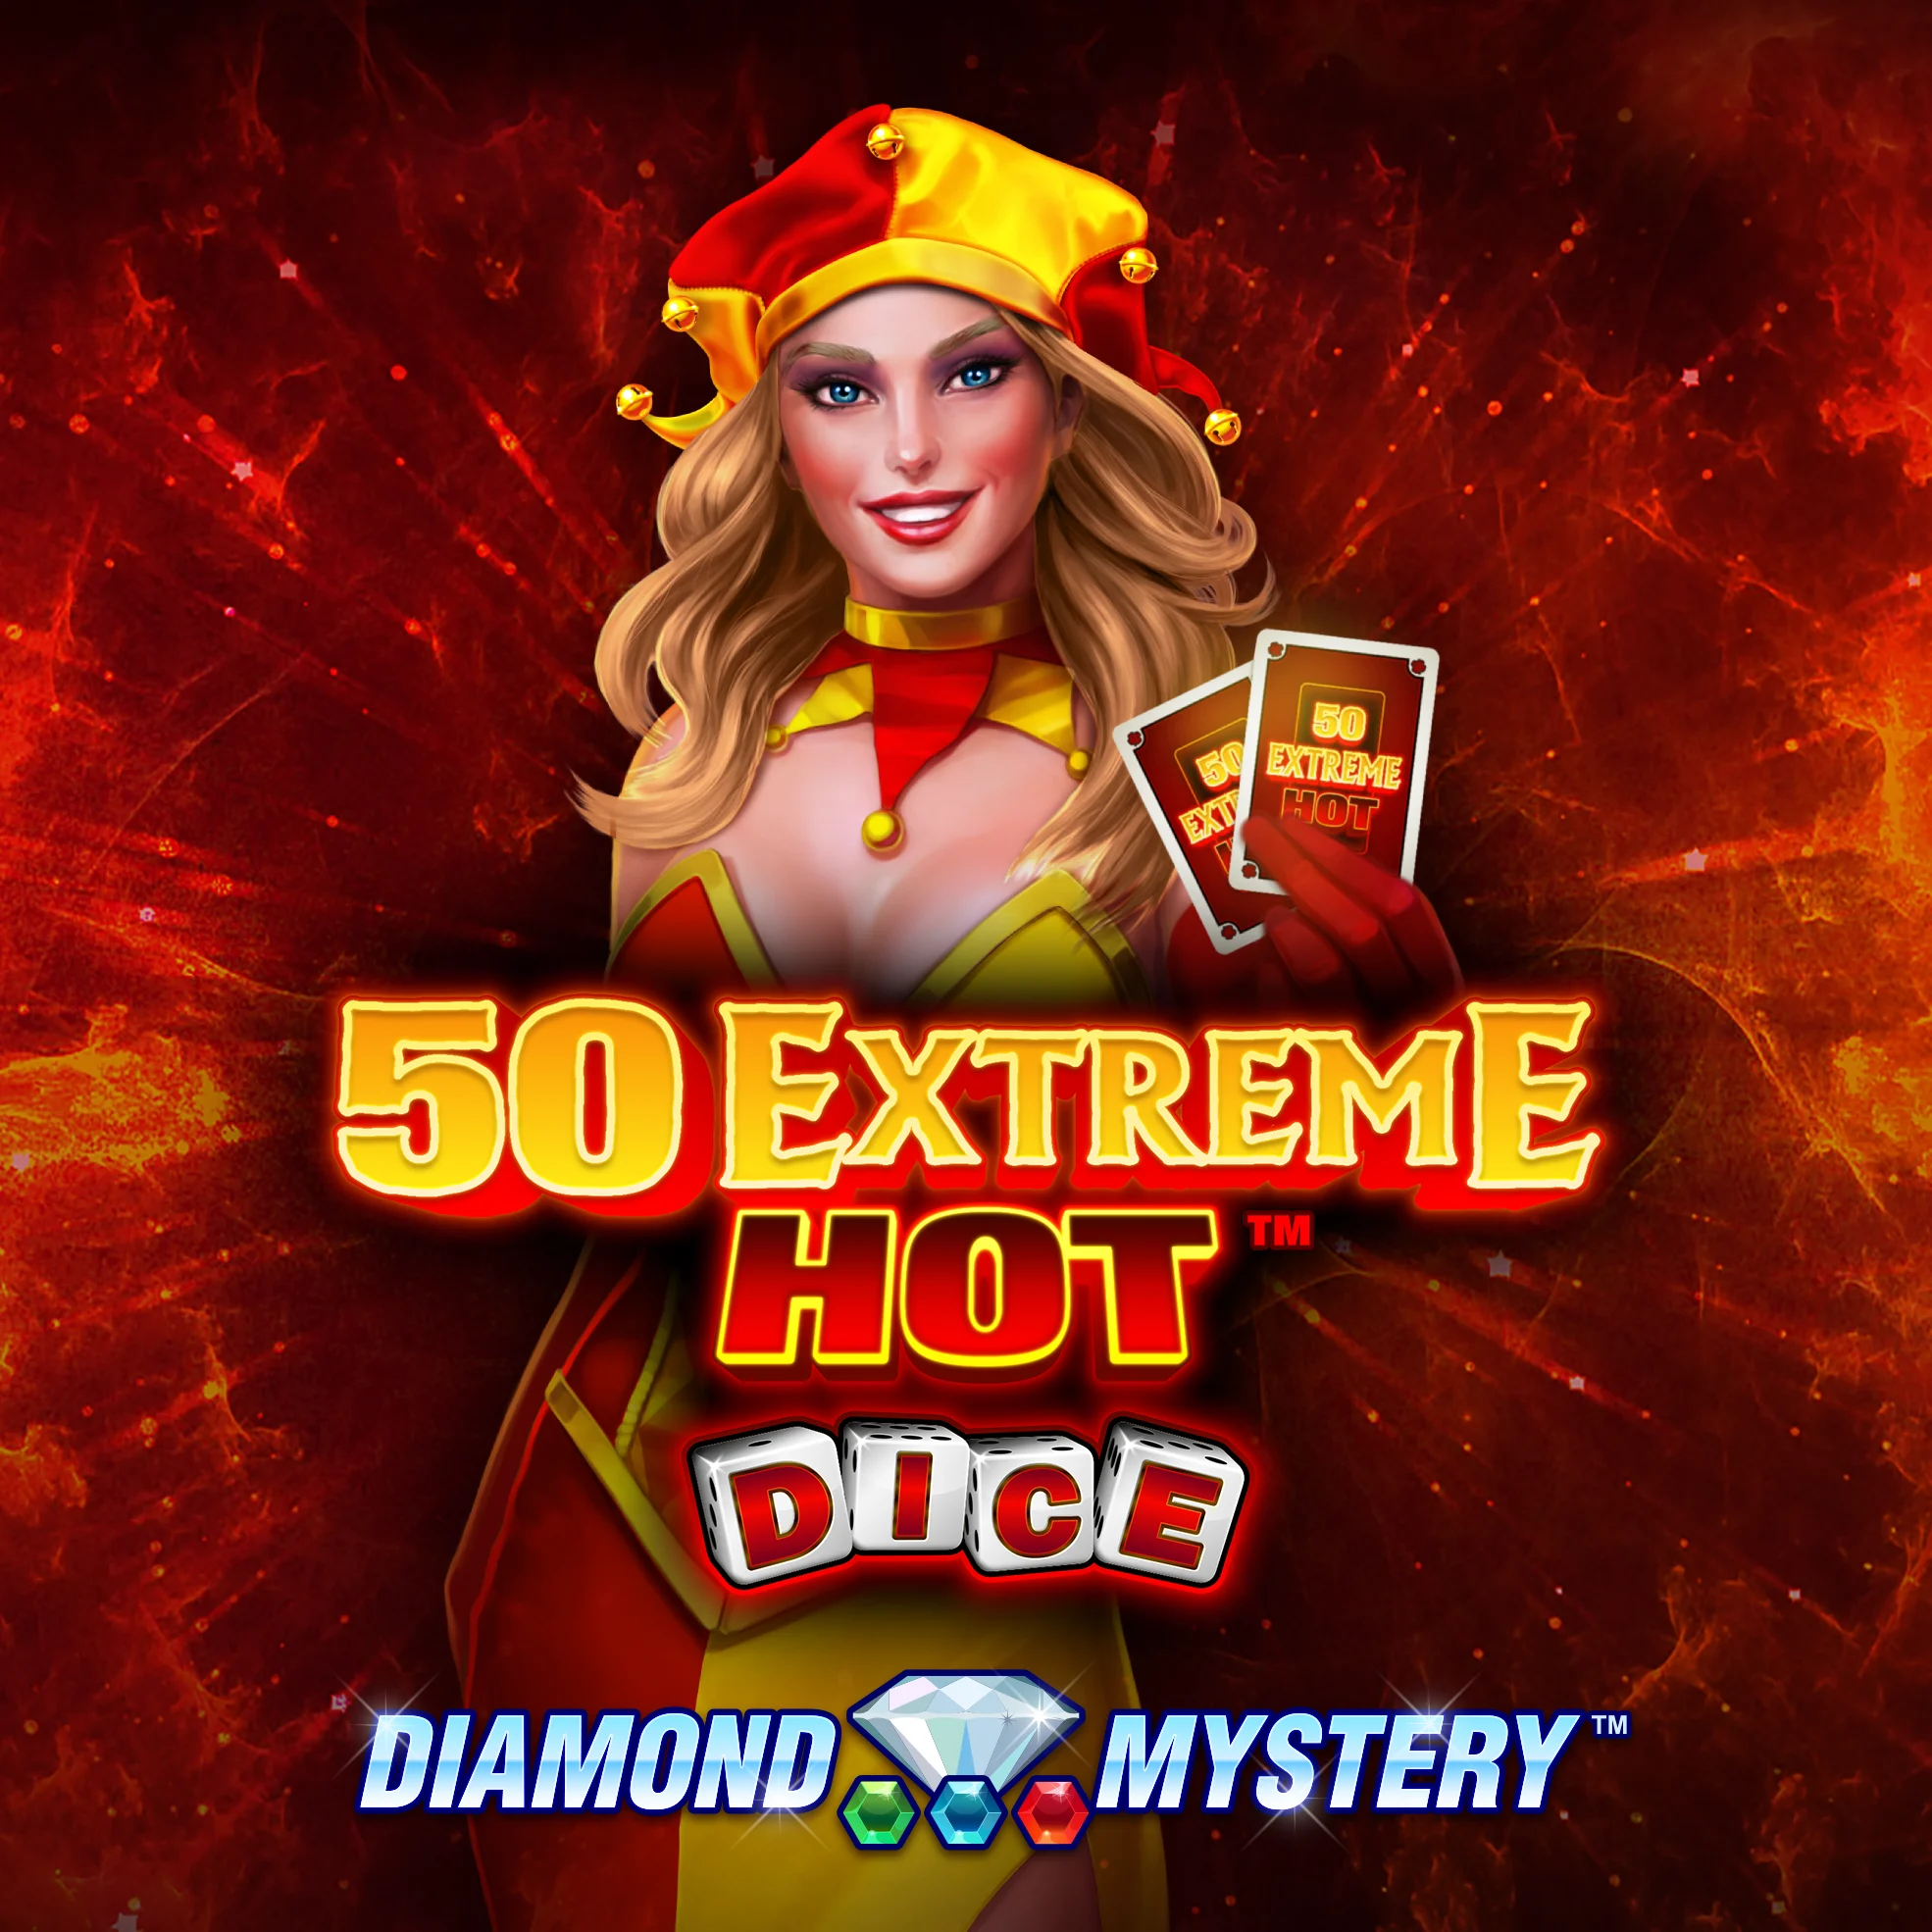 Play 50 Extreme Hot™ Dice on Starcasinodice online casino